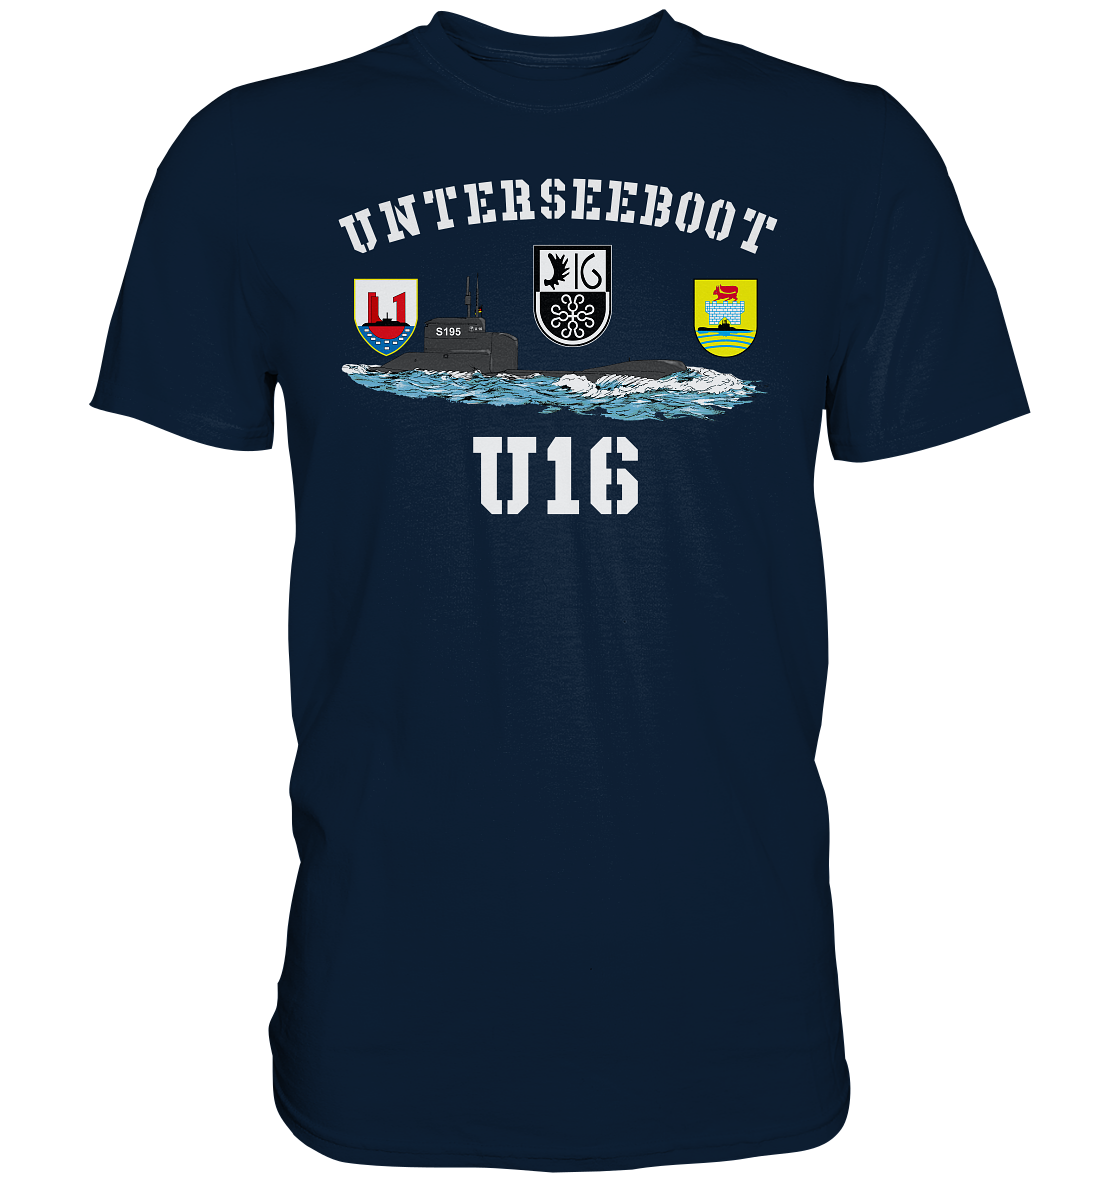 Unterseeboot U16 - Premium Shirt